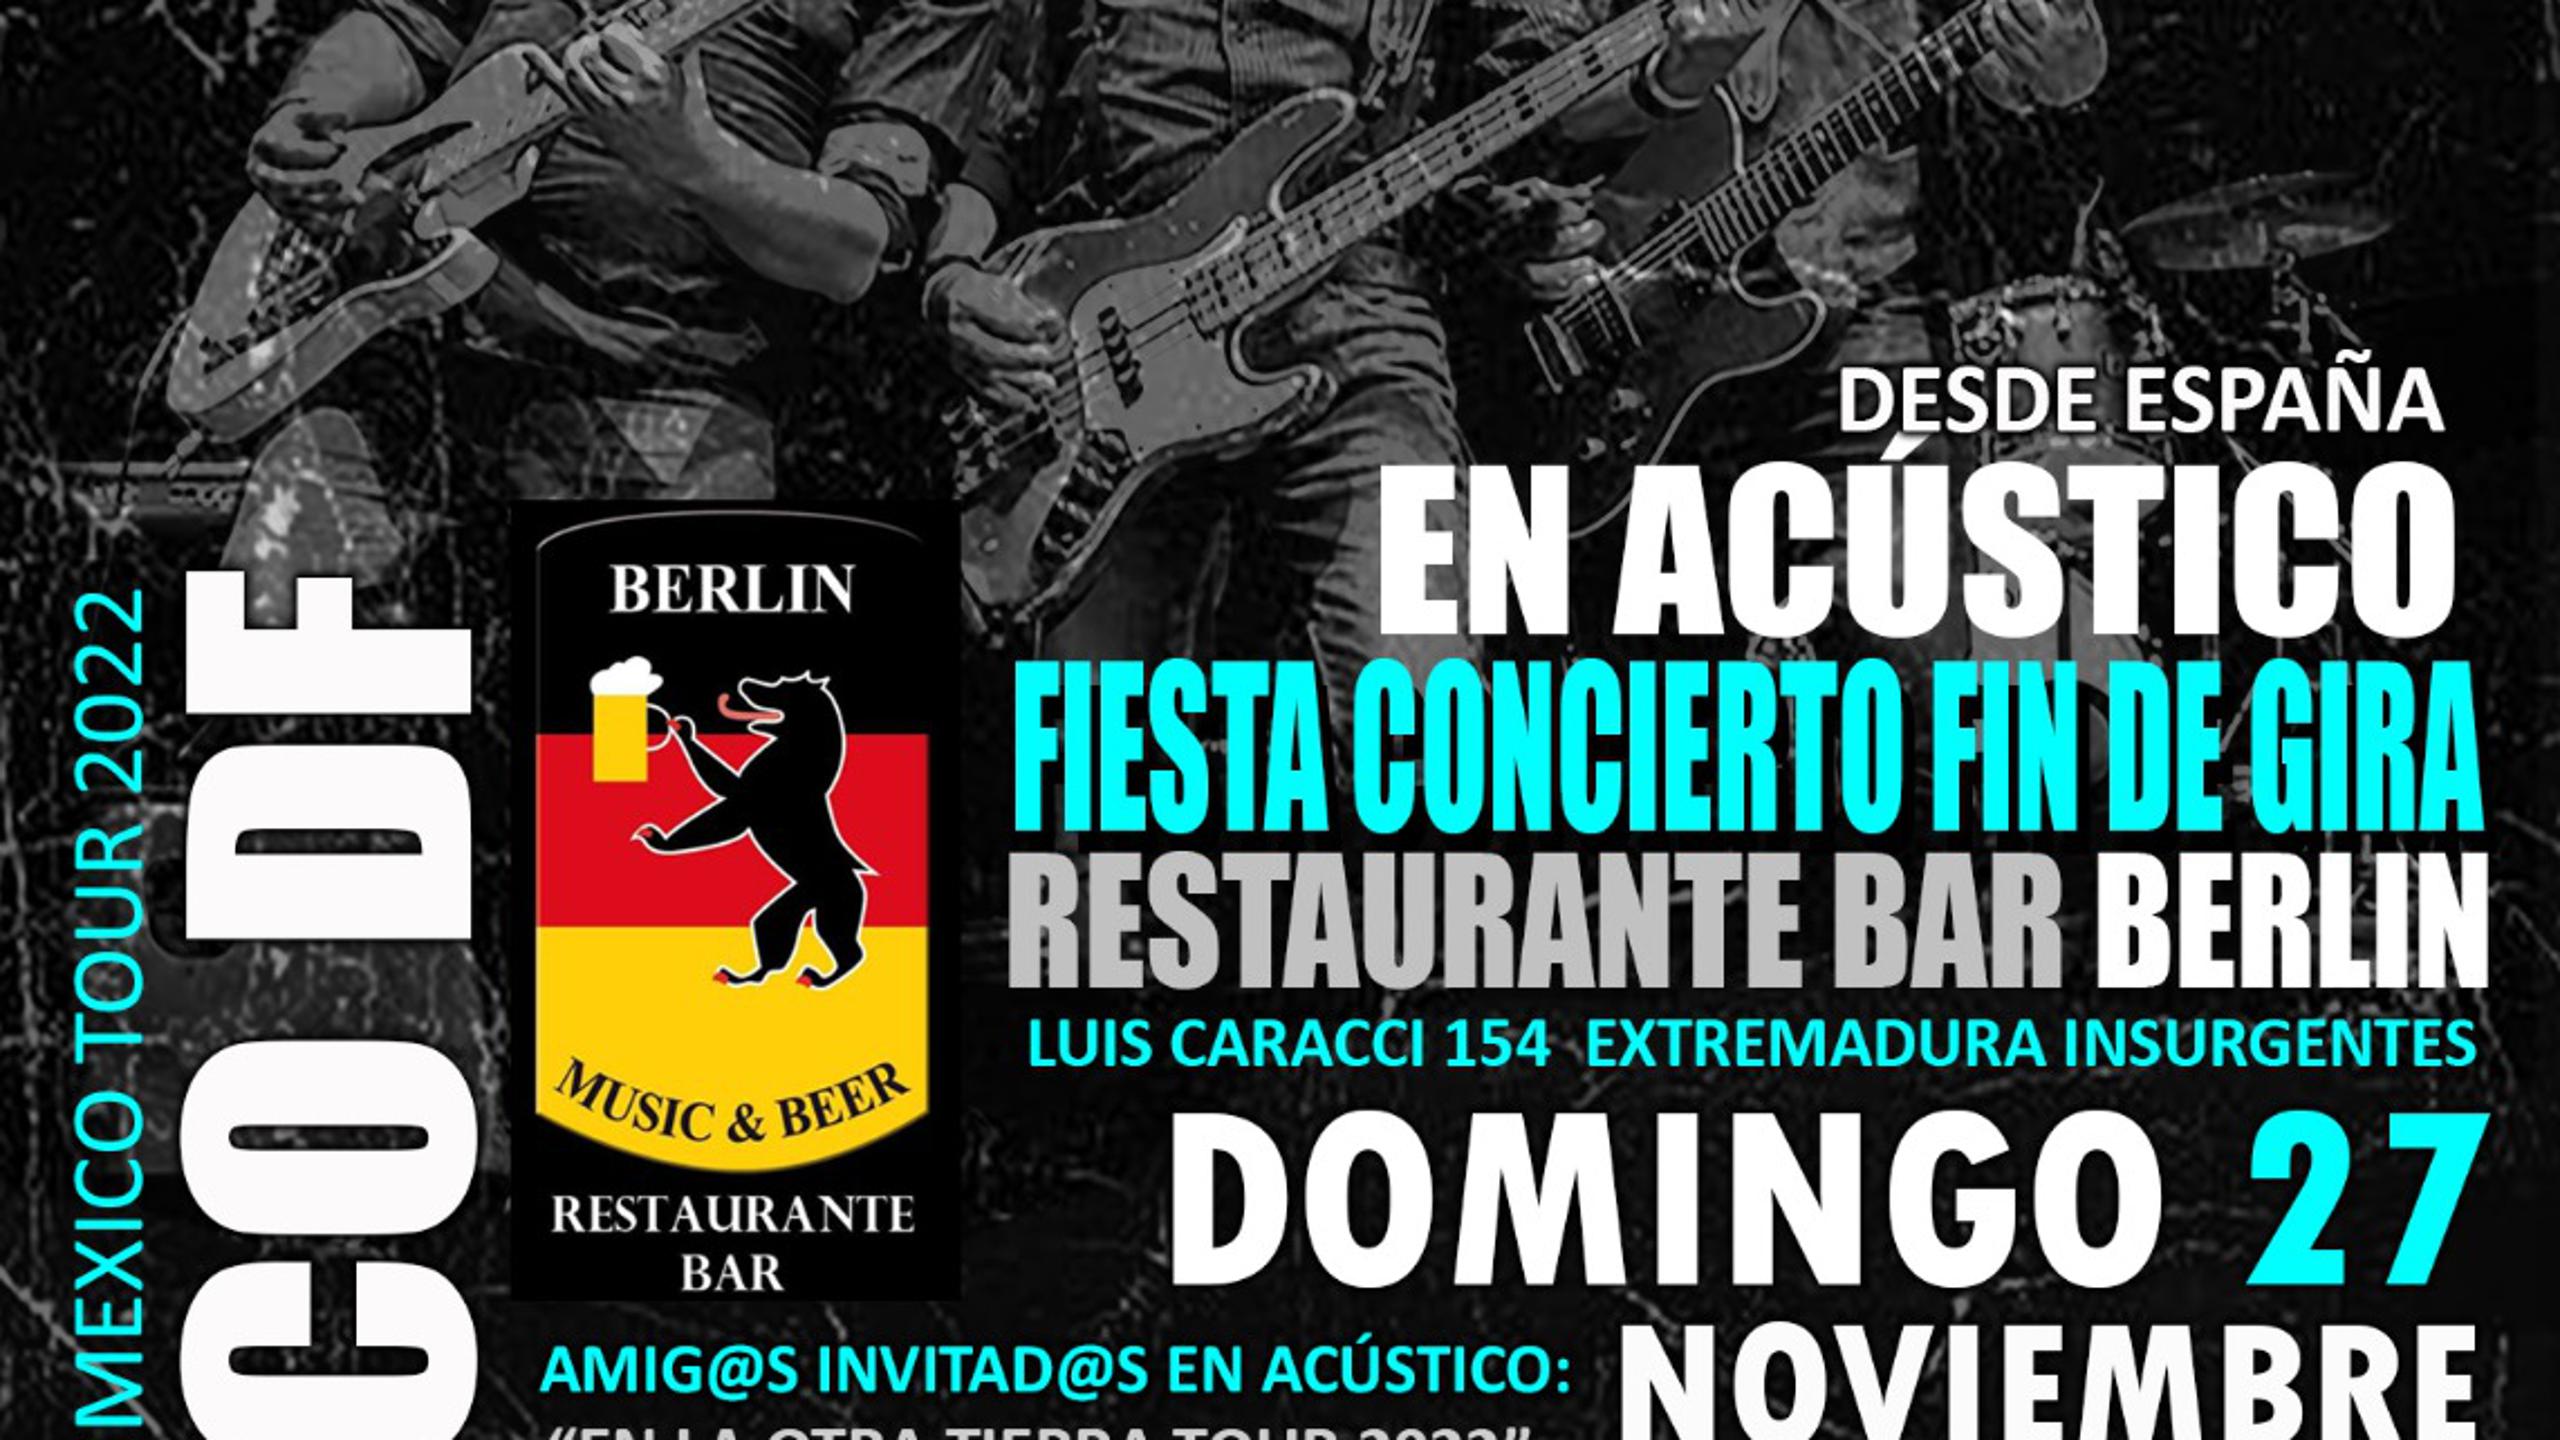 Stafas concert tickets for Berlín Music & Beer, CDMX Mexico City Sunday, 27  November 2022 | Wegow Netherlands